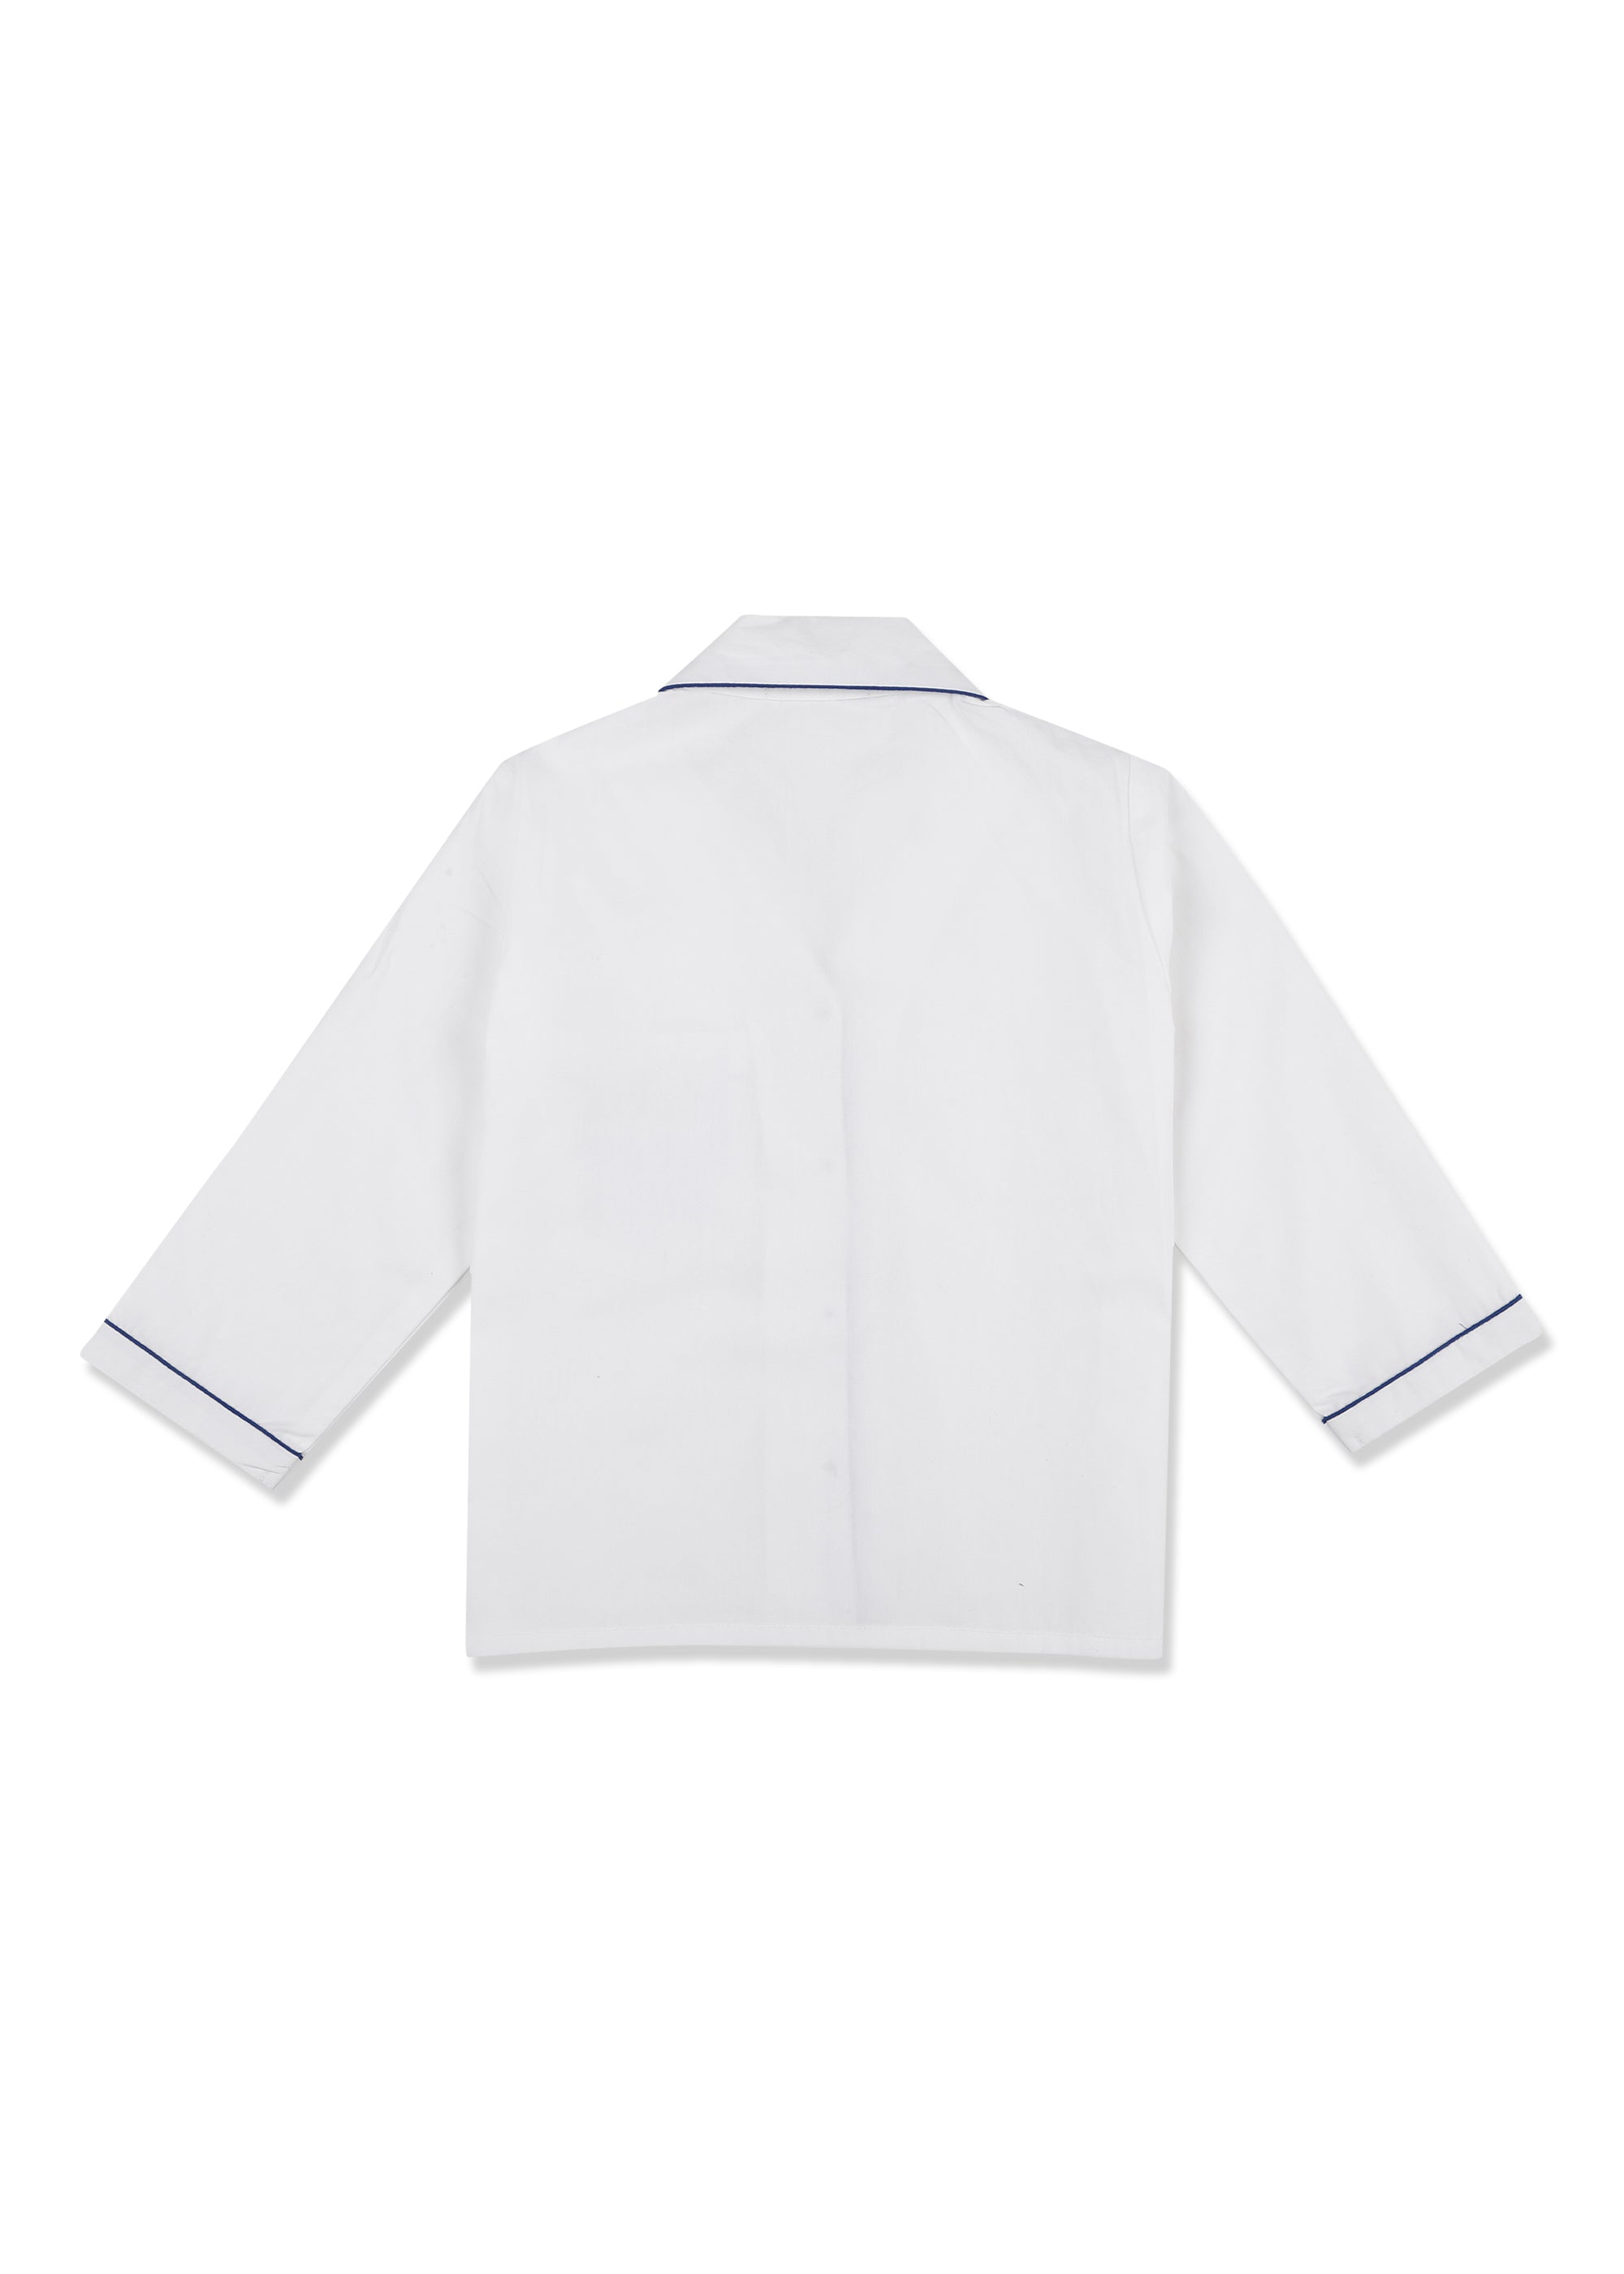 Twinkle Twinkle Little Star Embroidered Pocket Long Sleeve Kids Night Suit - Shopbloom